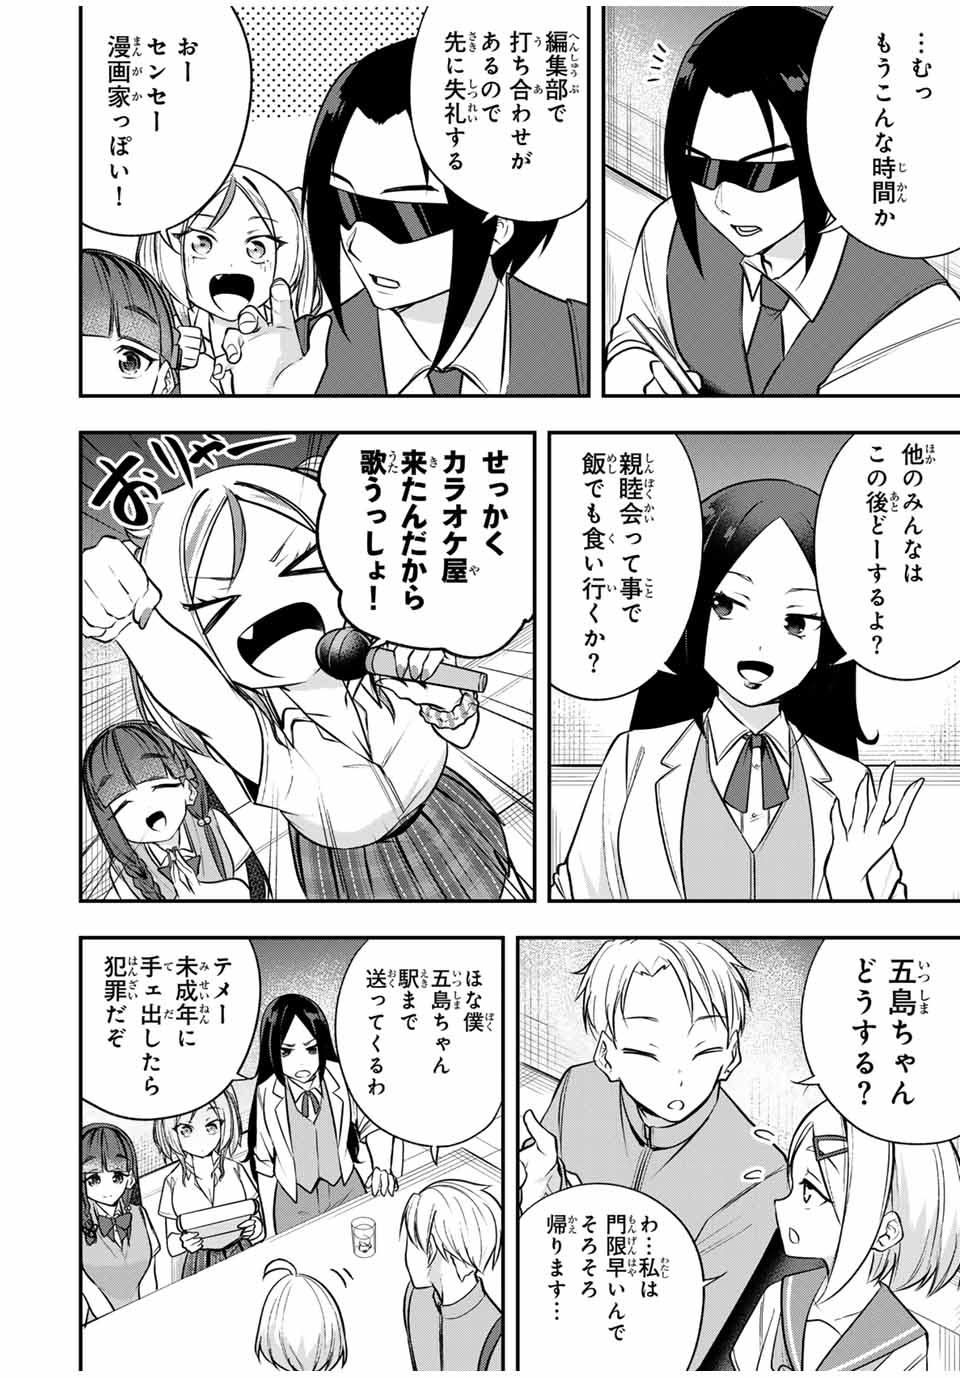 Heroine wa xx Okasegitai - Chapter 12 - Page 16